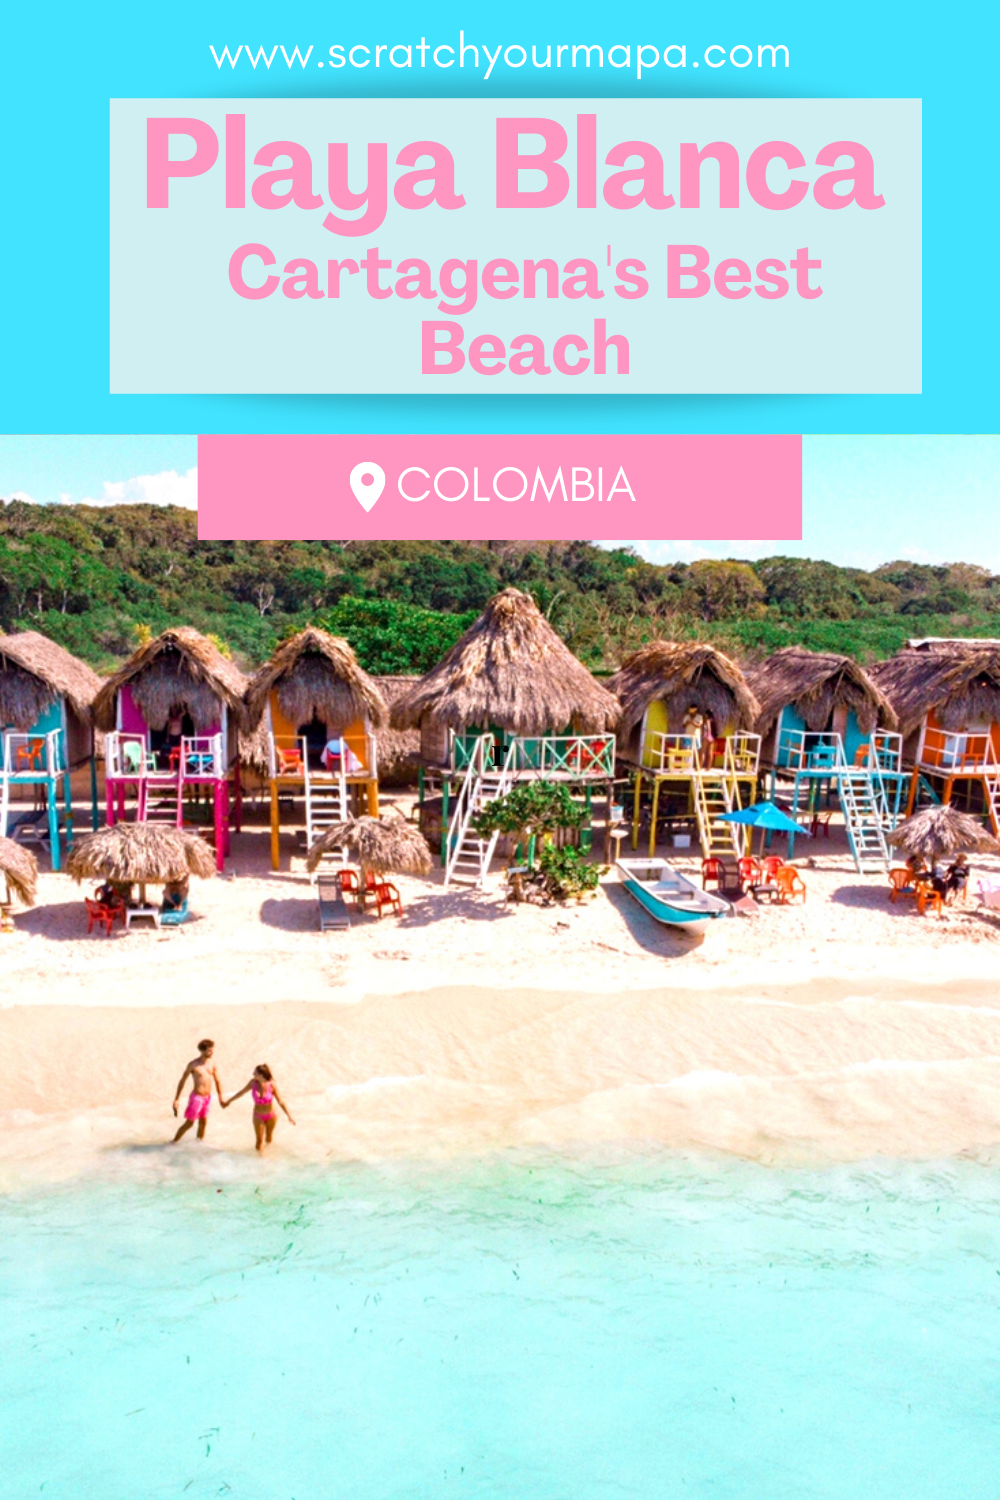 Playa Blanca, Cartagena’s Most Beautiful Beach